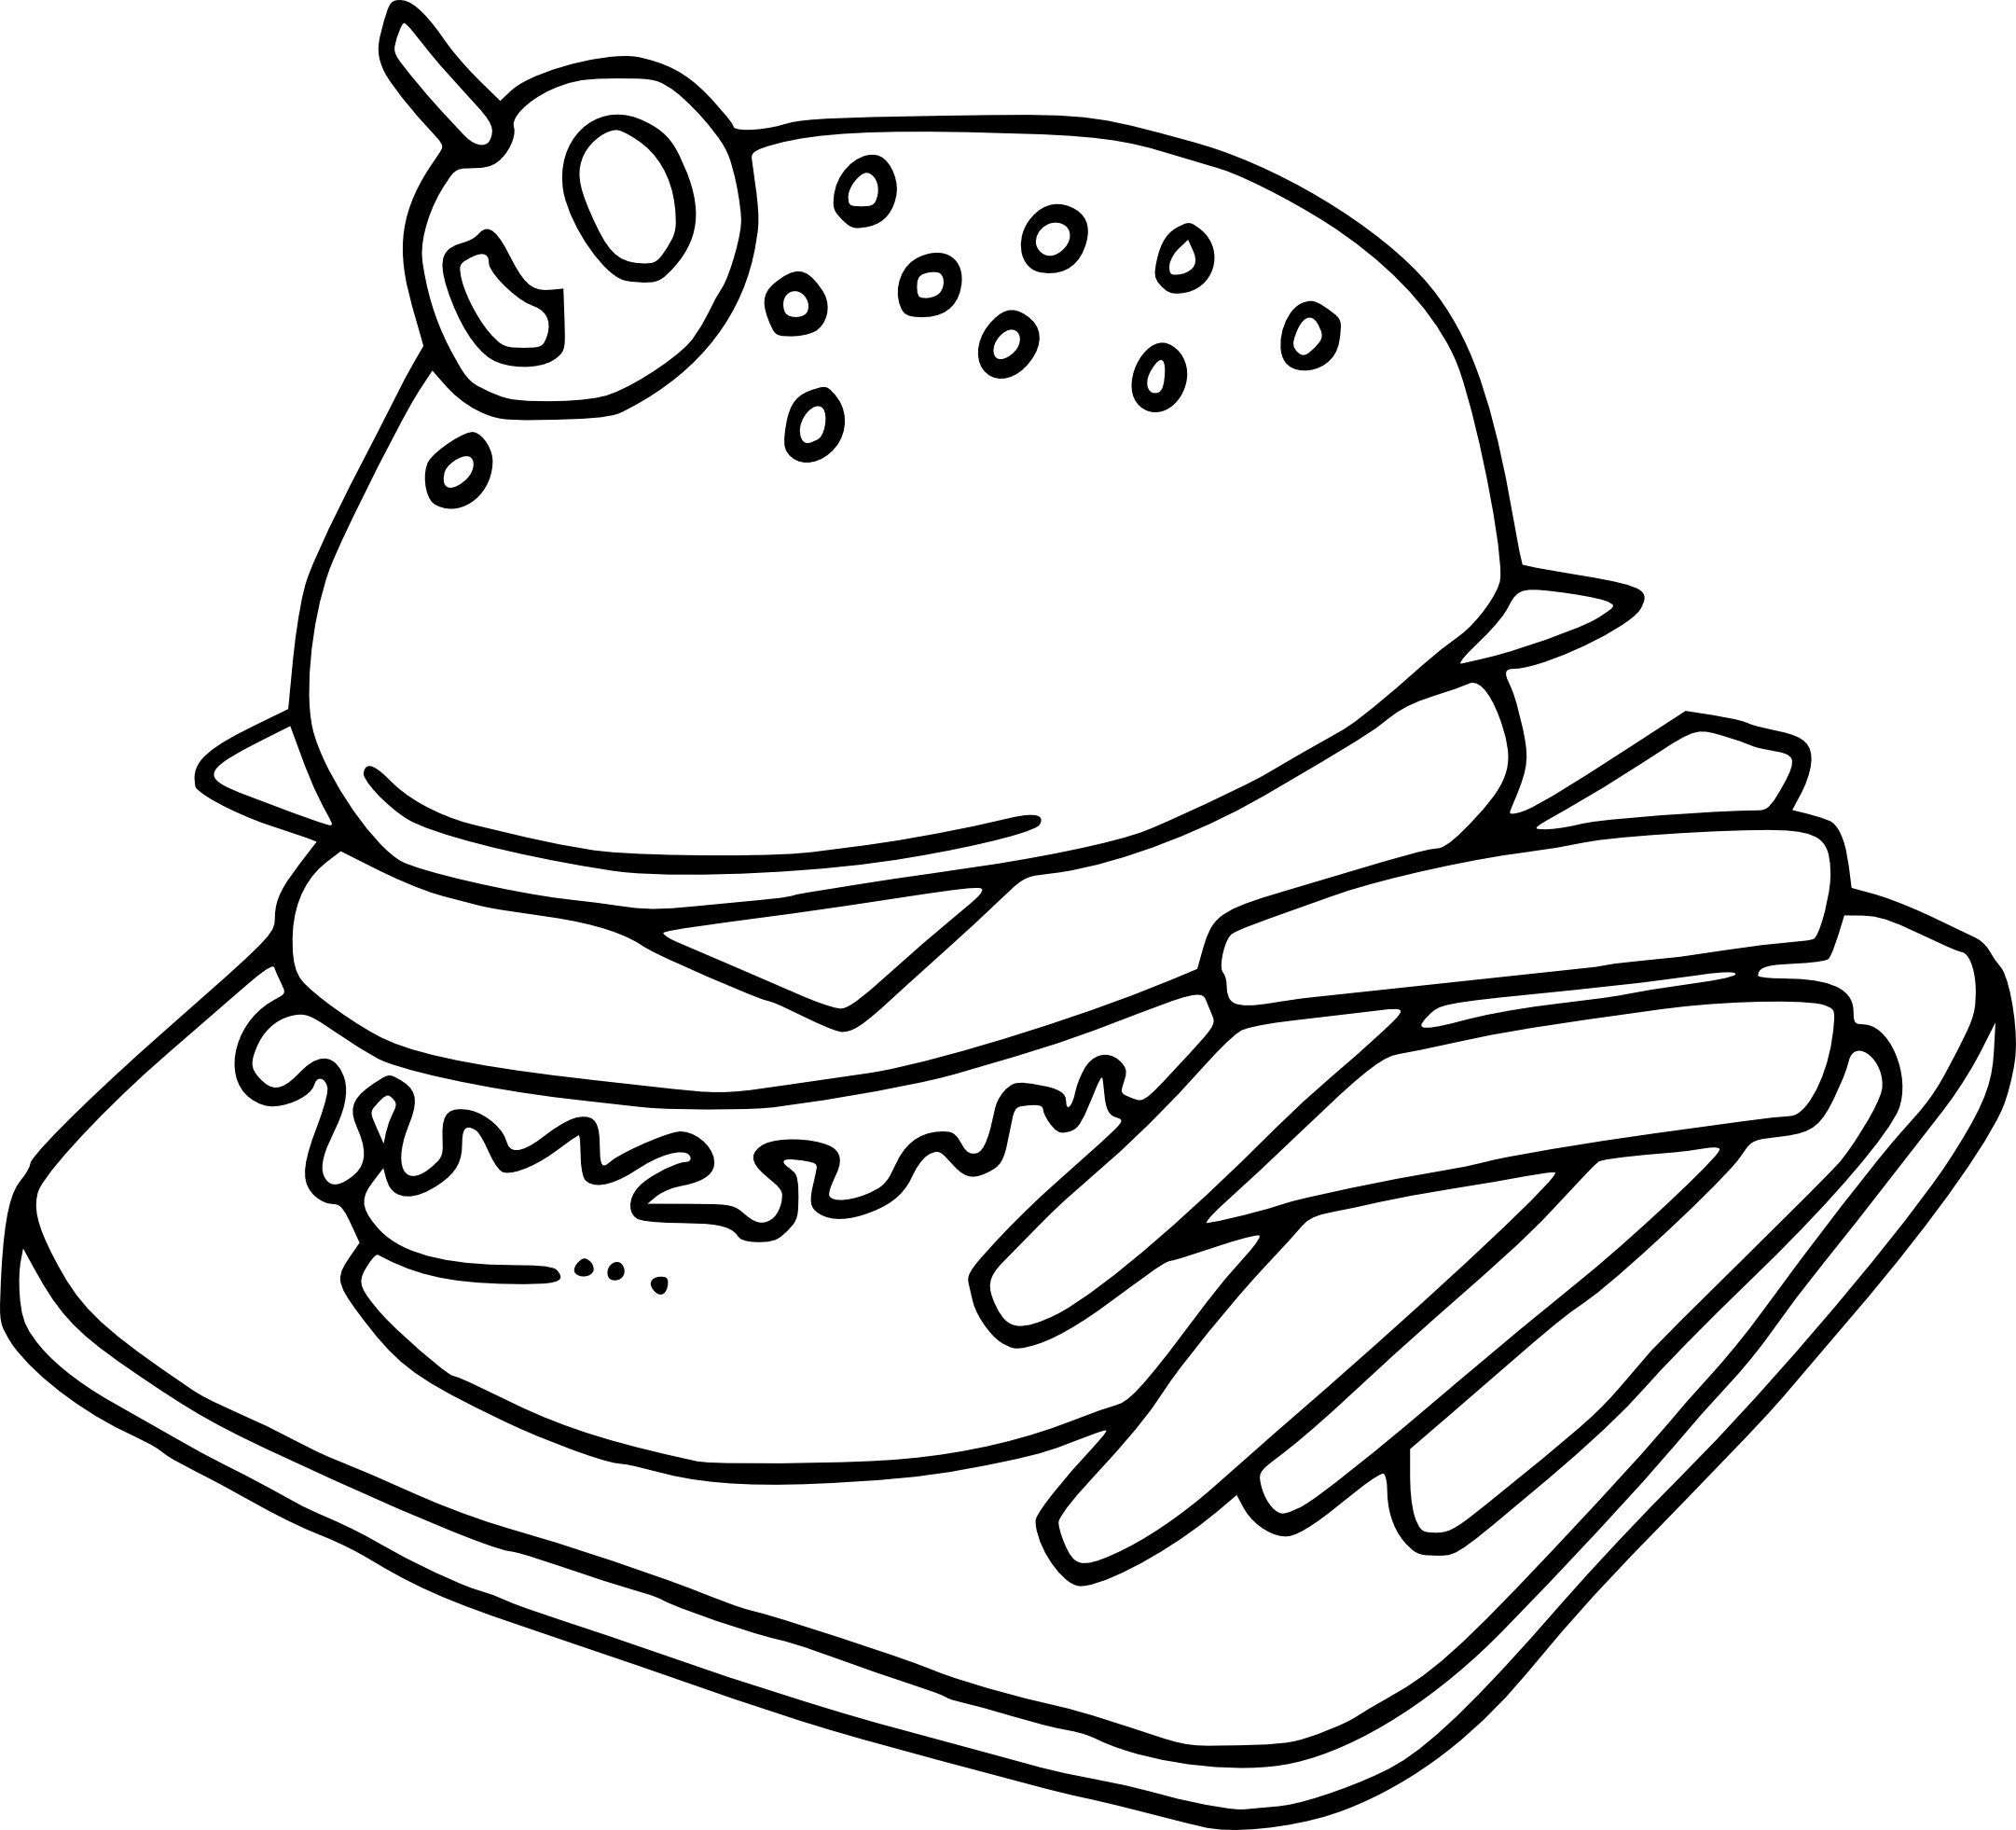 Напечатать еду. Раскраска еда. Раскраска бургер. Раскраска гамбургер. Раскраска бутерброд.